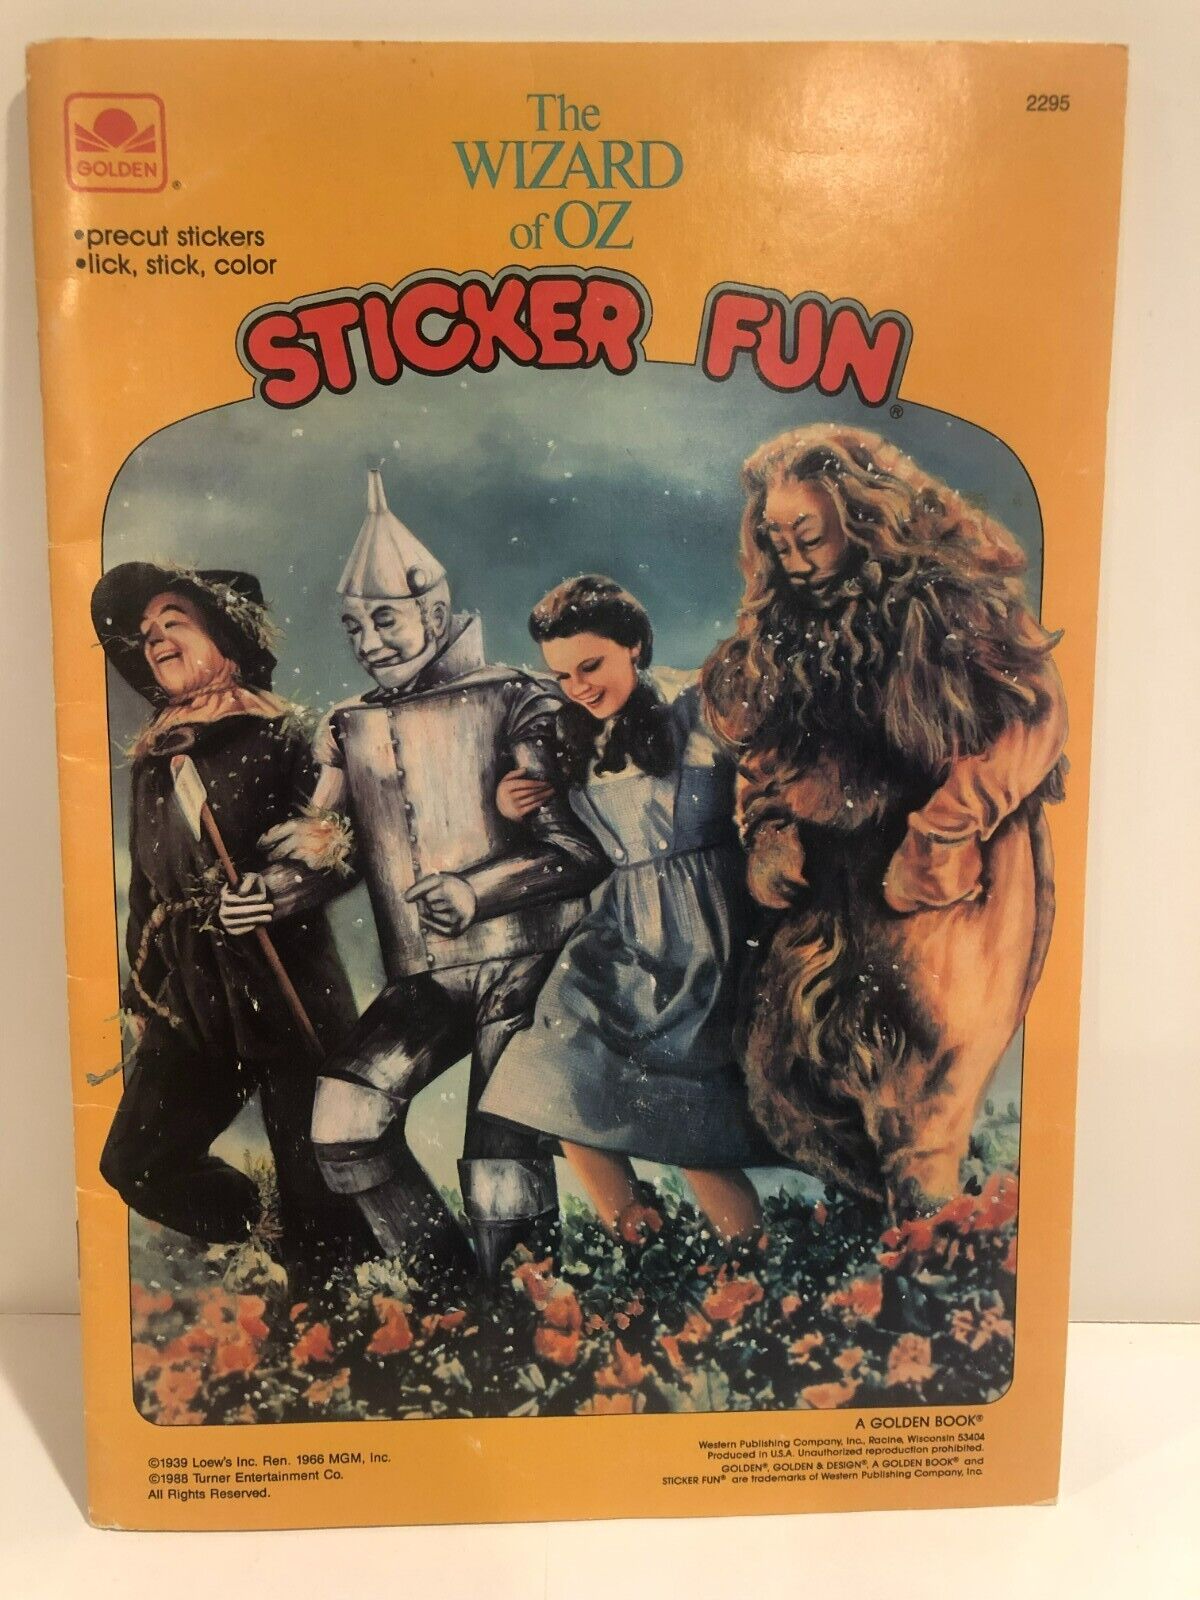 Vintage golden book the wizard of oz sticker fun book